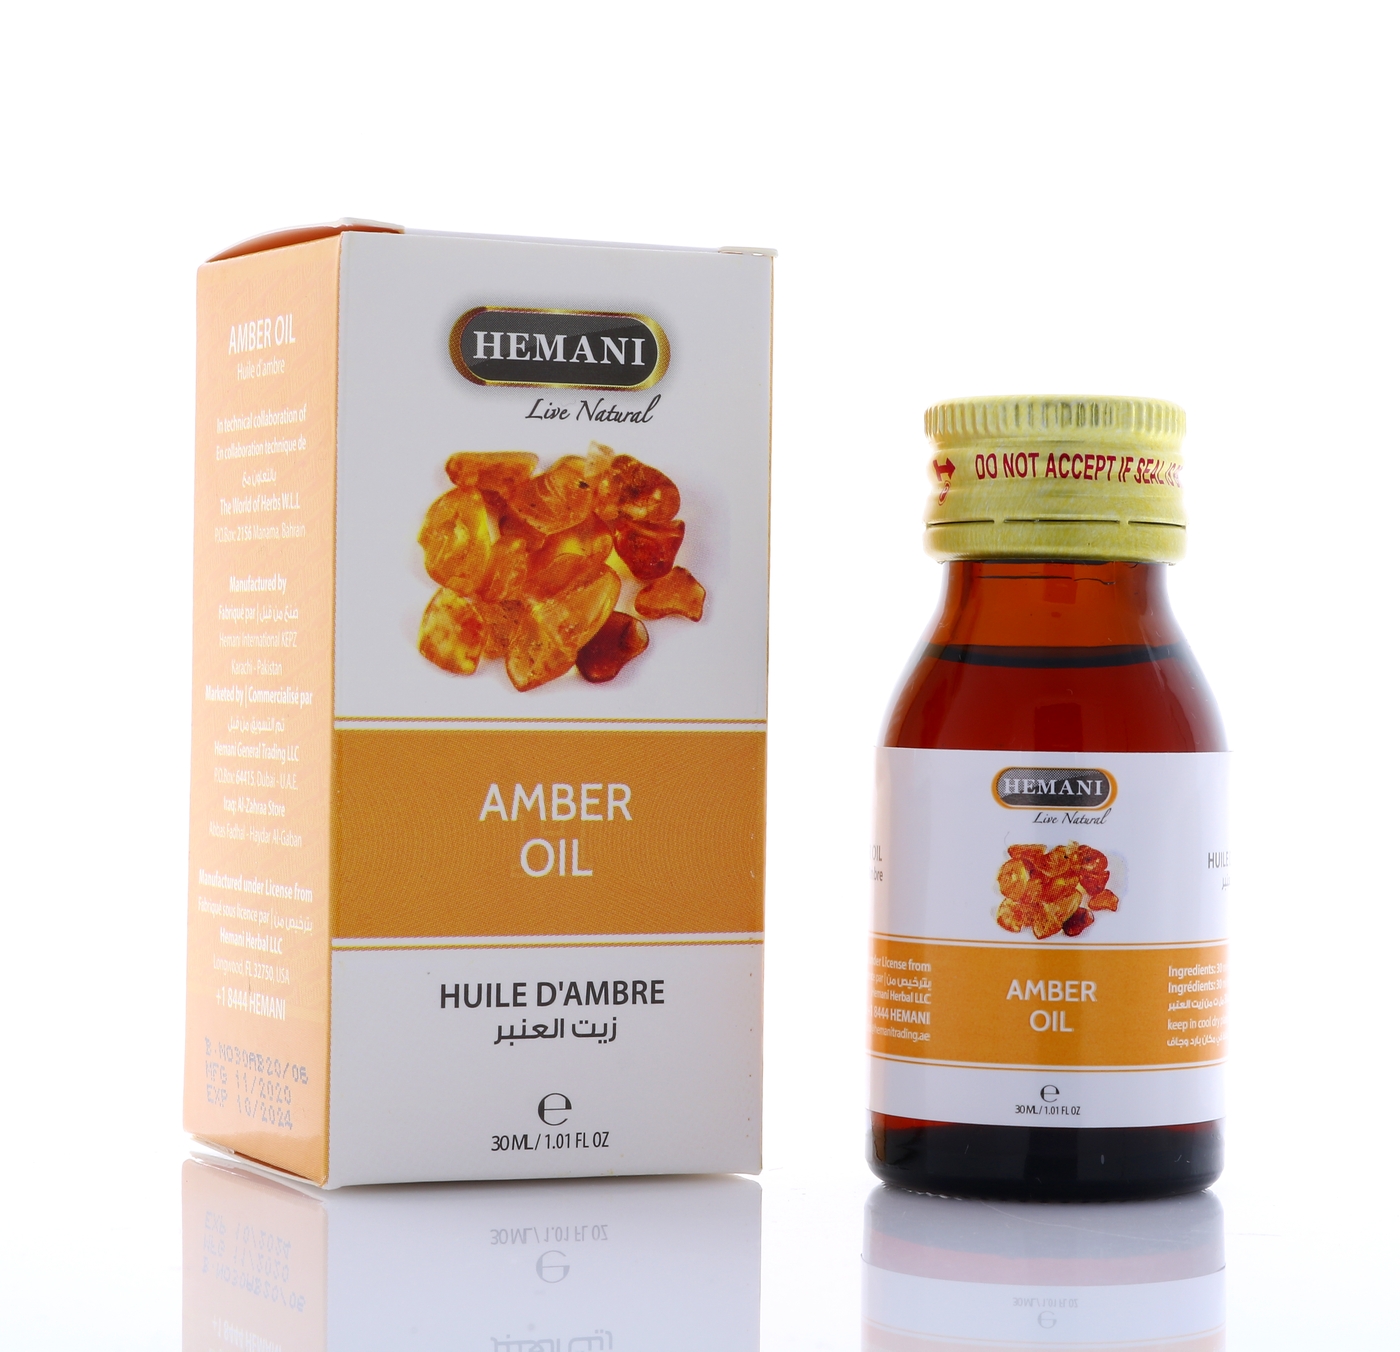 HEMANI Amber Oil 30mL (1 FL OZ) - Edible Oil